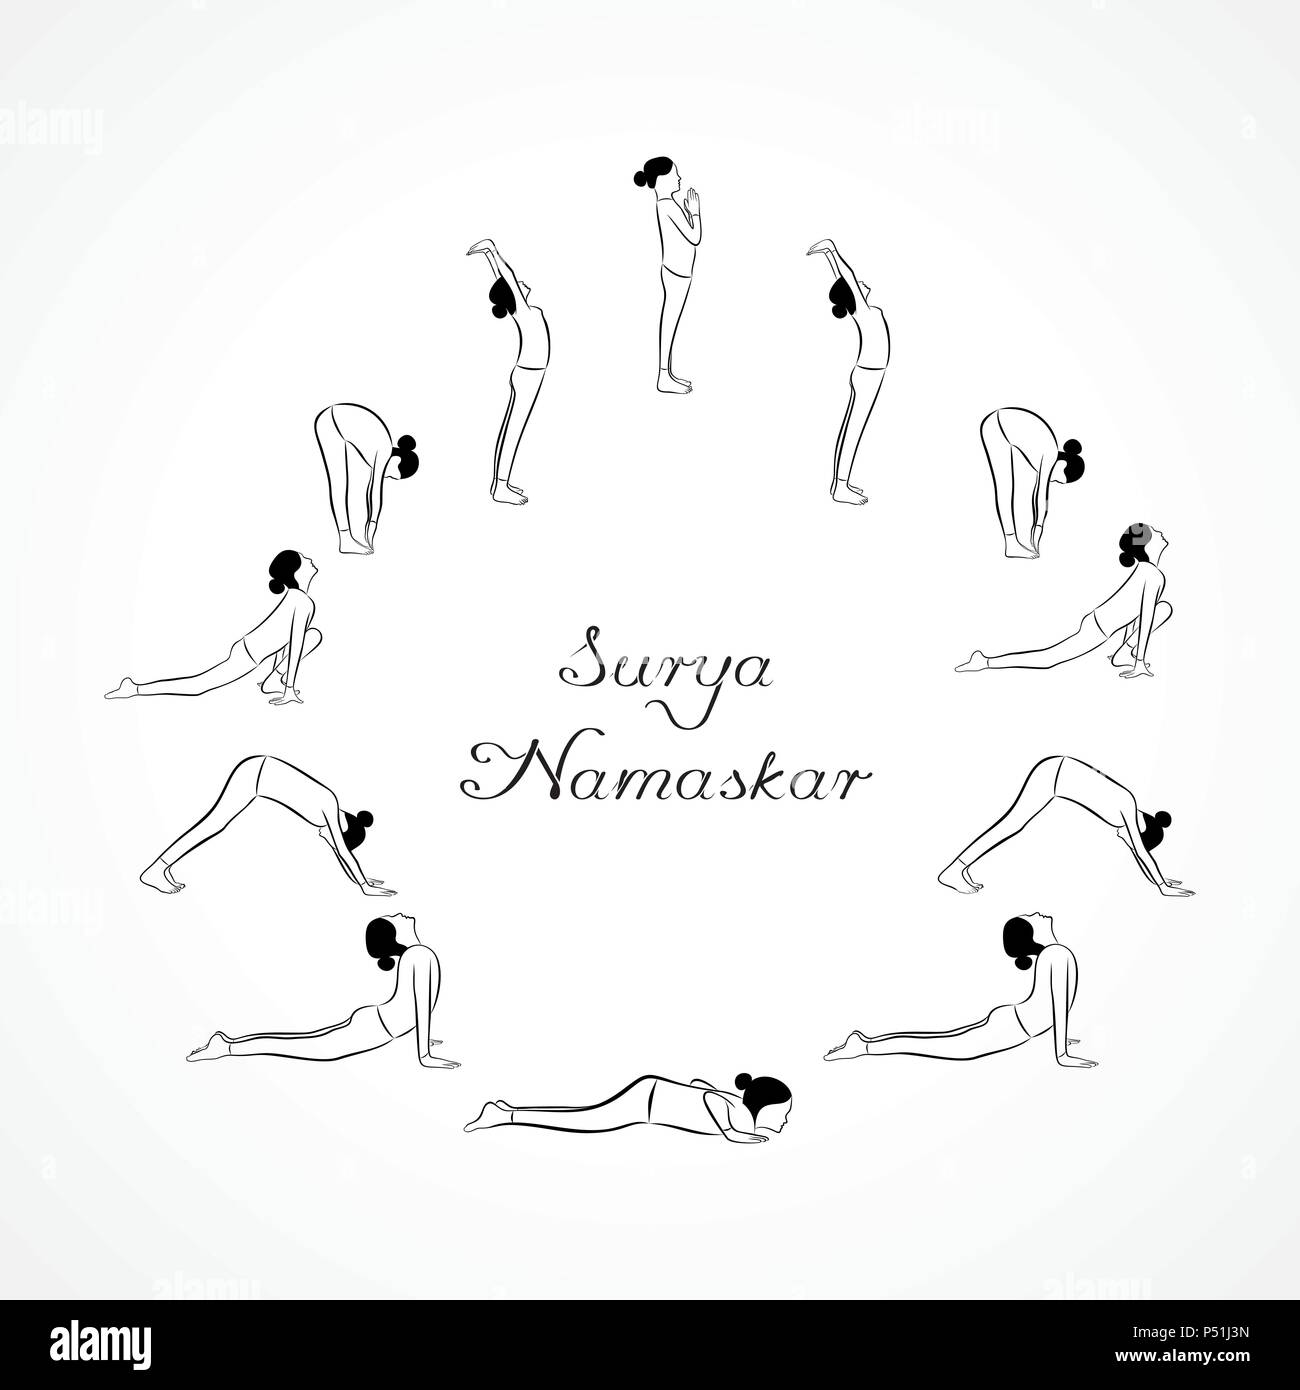 मंत्र सहित सूर्यनमस्कार कैसे करें। surya namaskar with mantra and meaning  by SWAMINAND SINHA - YouTube